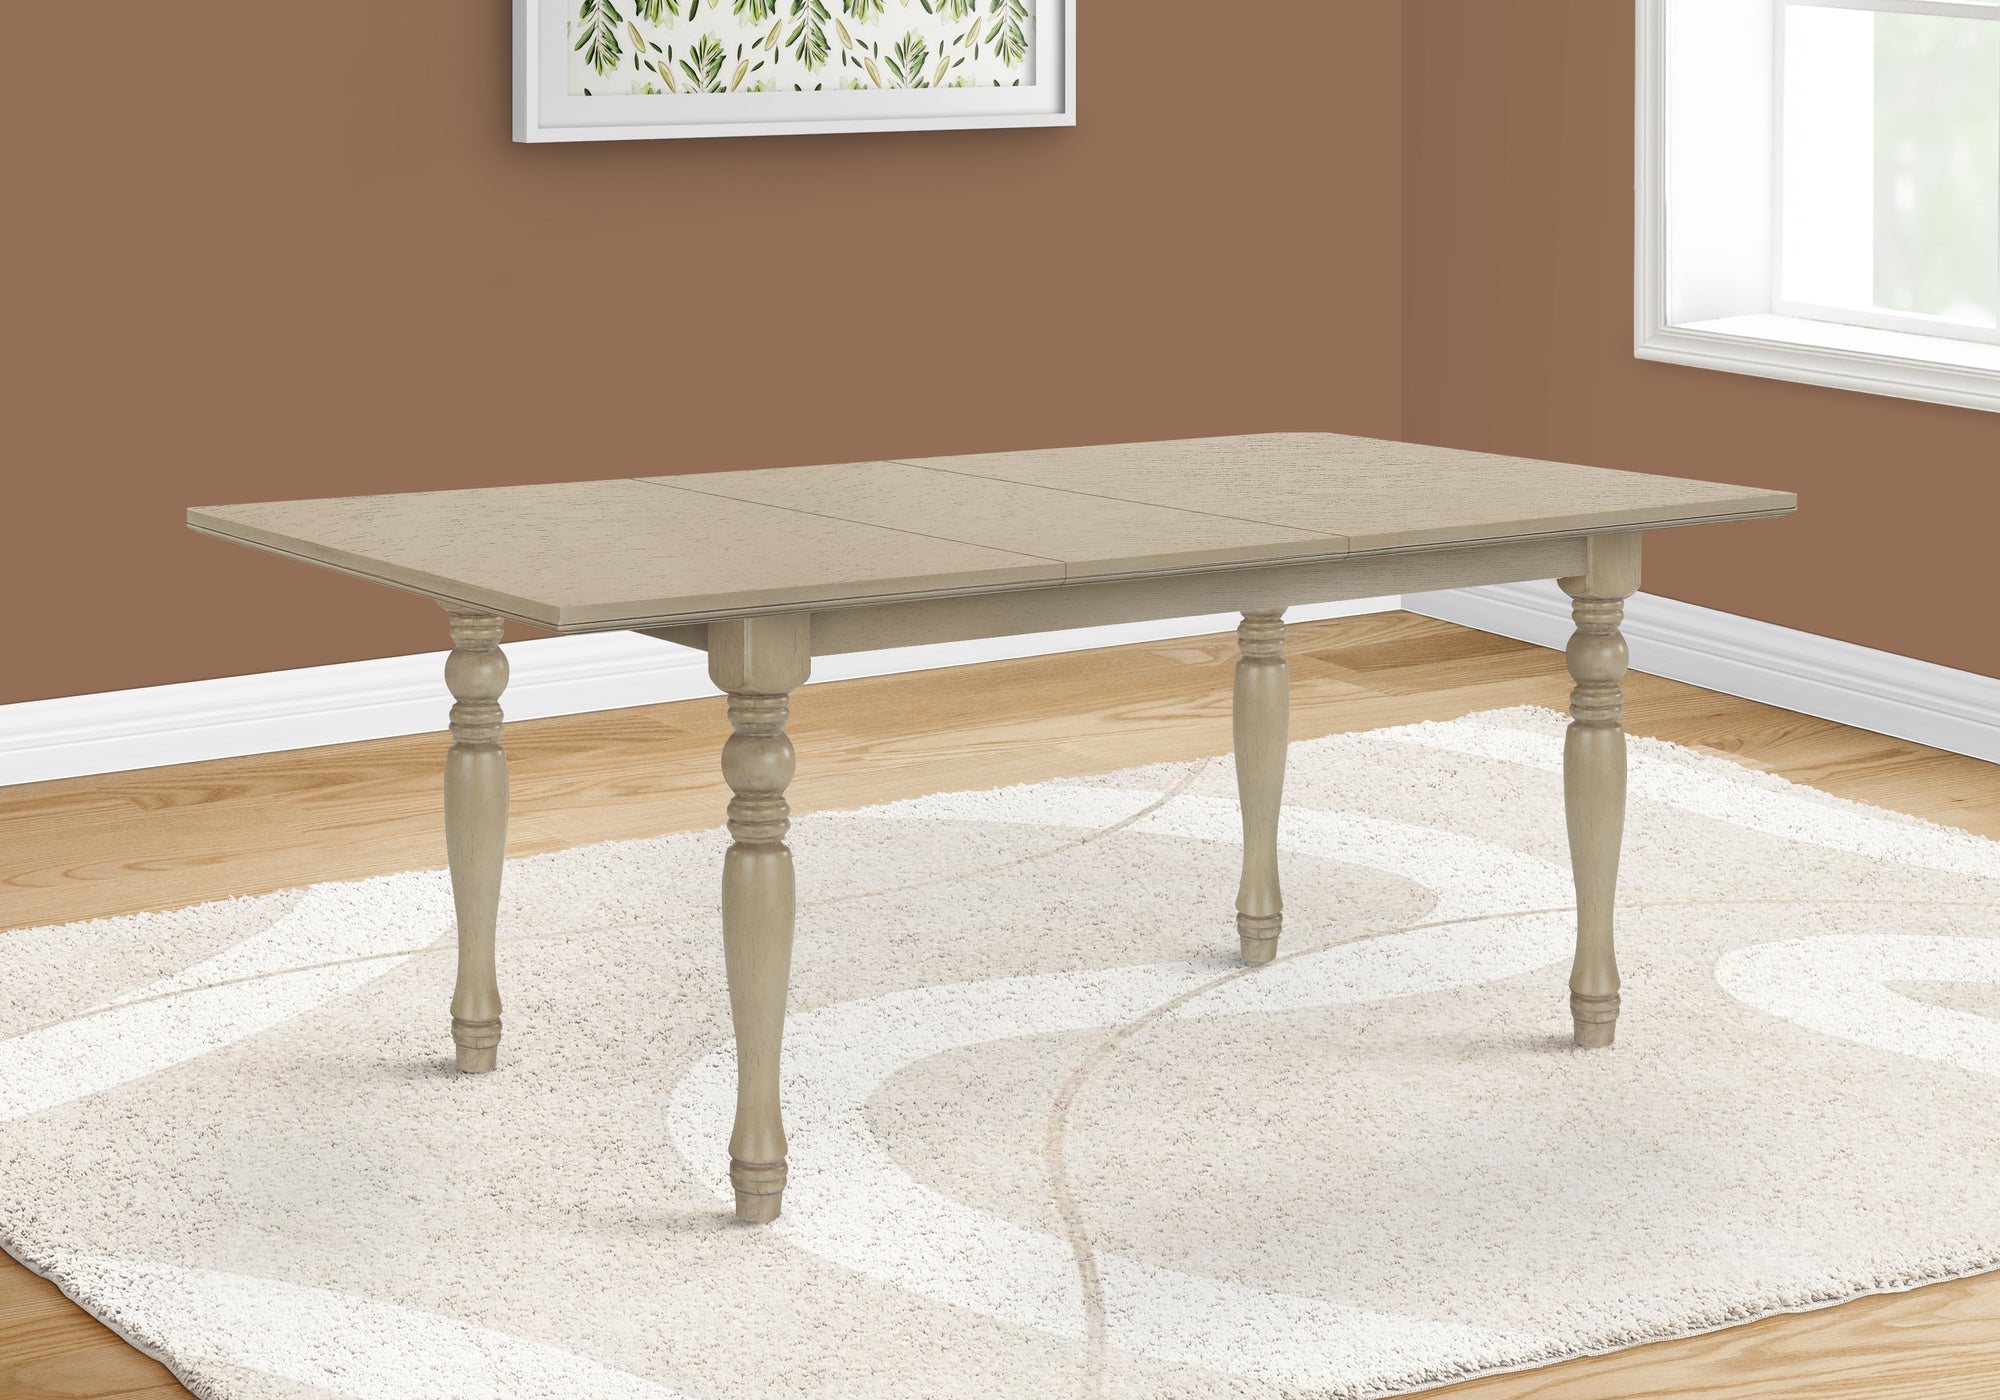 MN-401391    Dining Table, 78" Rectangular, 18" Extension Panel, Veneer Top, Solid Wood Legs, Dining Room, Kitchen, Antique Grey Veneer, Wood Legs, Transitional